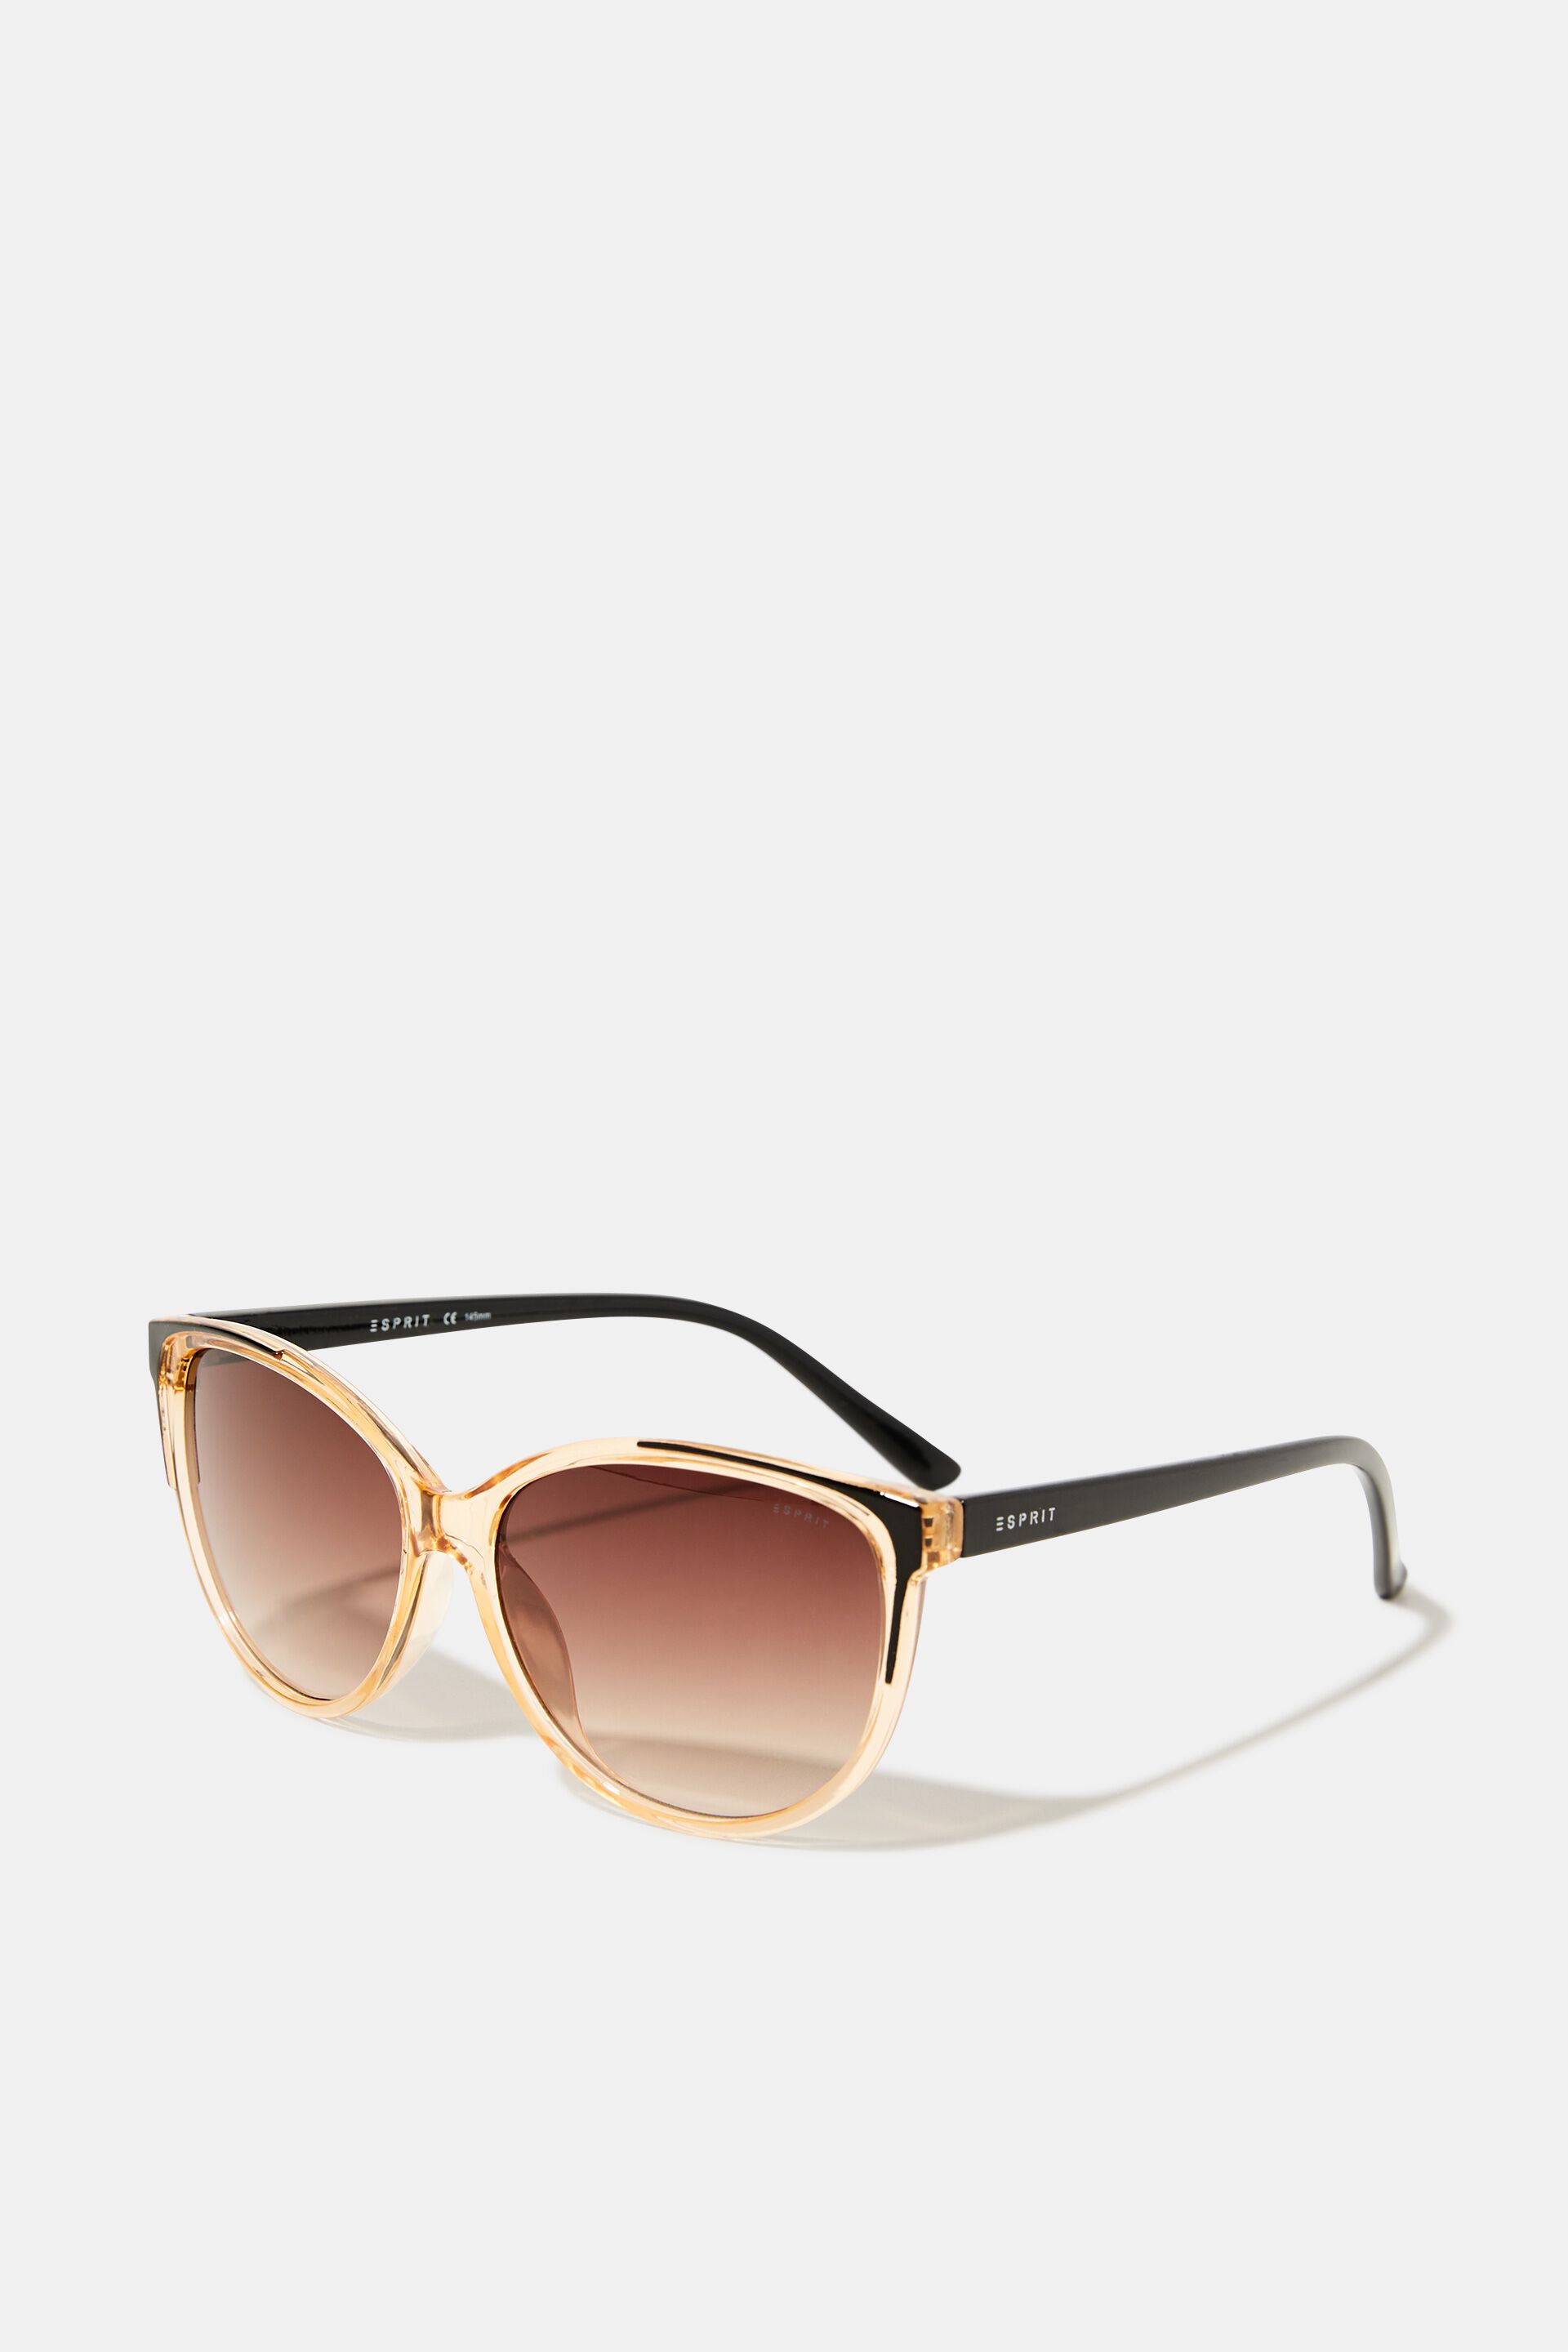 Esprit Online Store Sunglasses with transparent frame